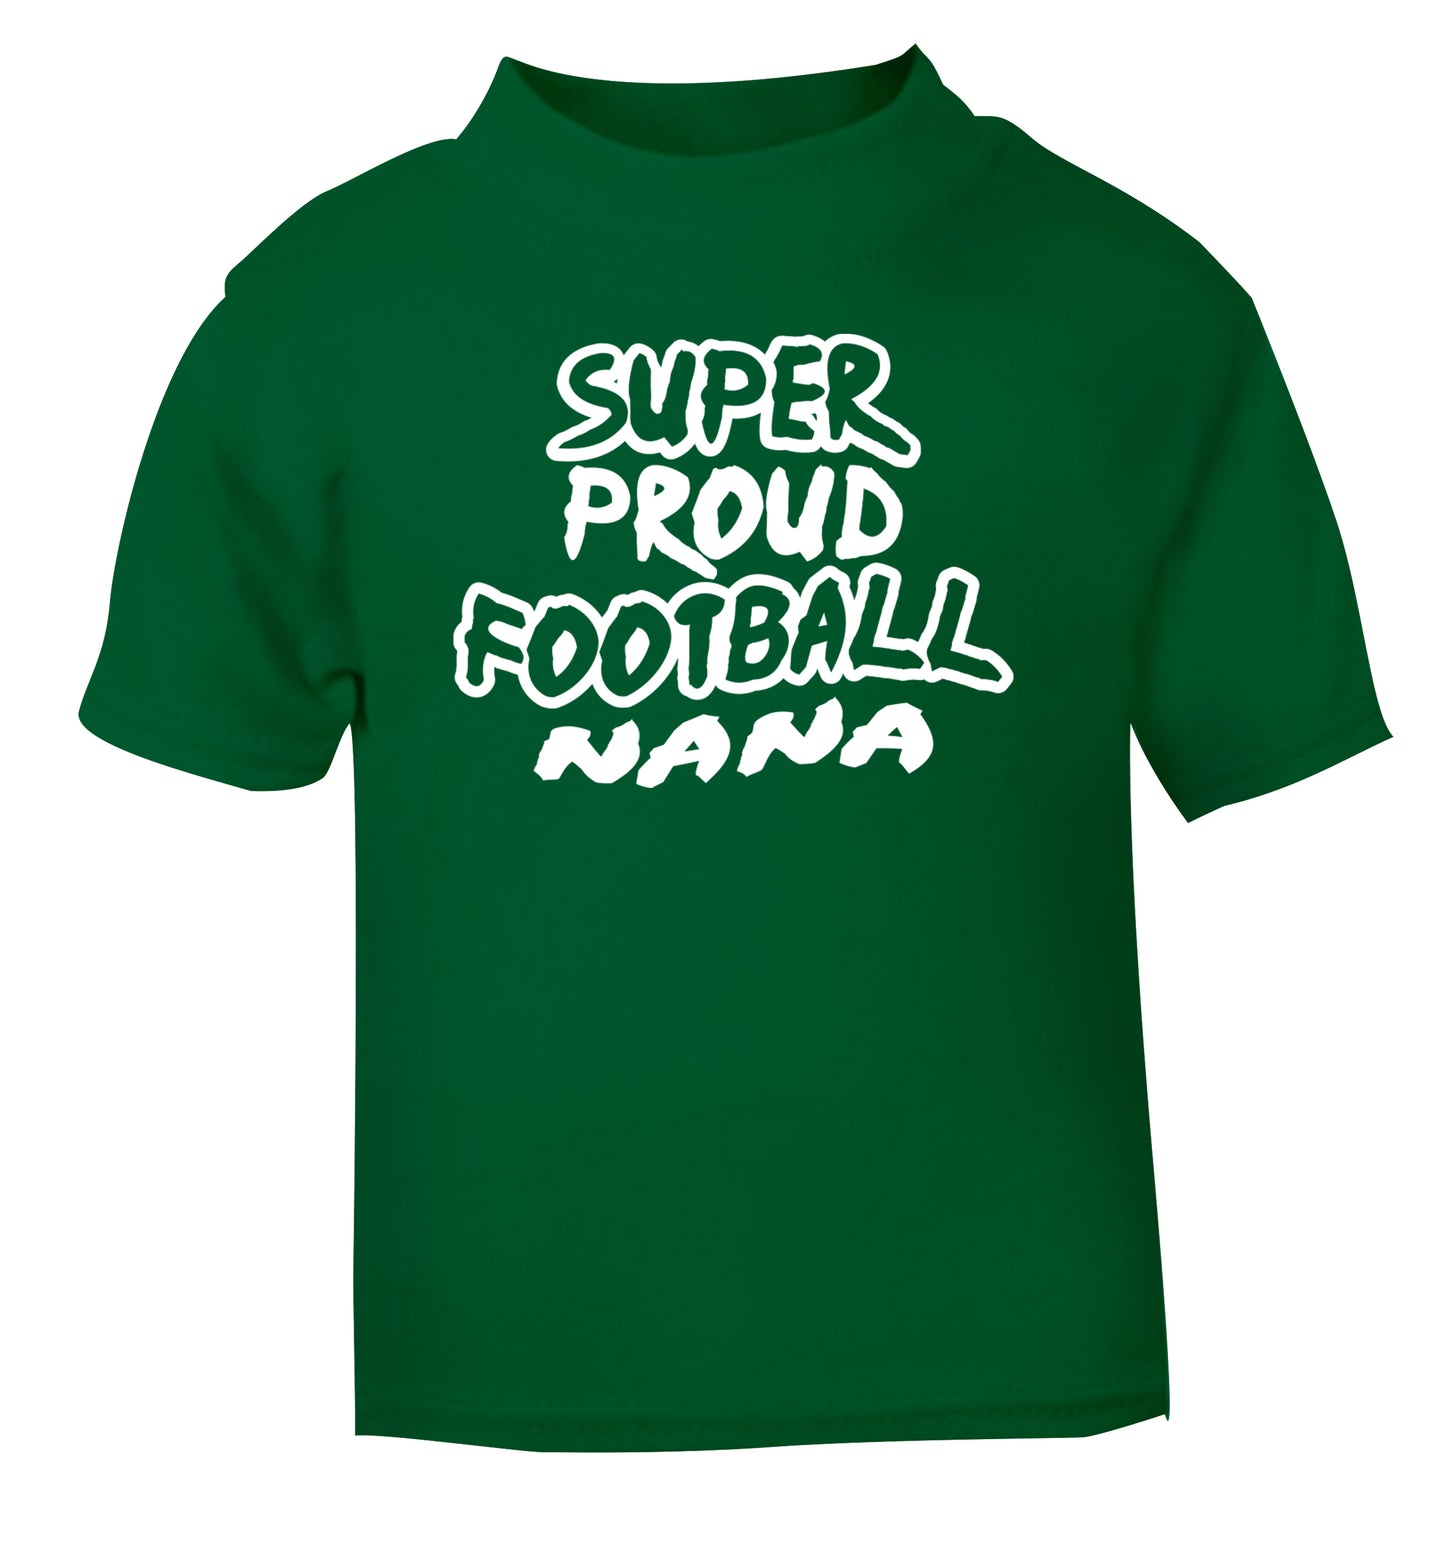 Super proud football nana green Baby Toddler Tshirt 2 Years